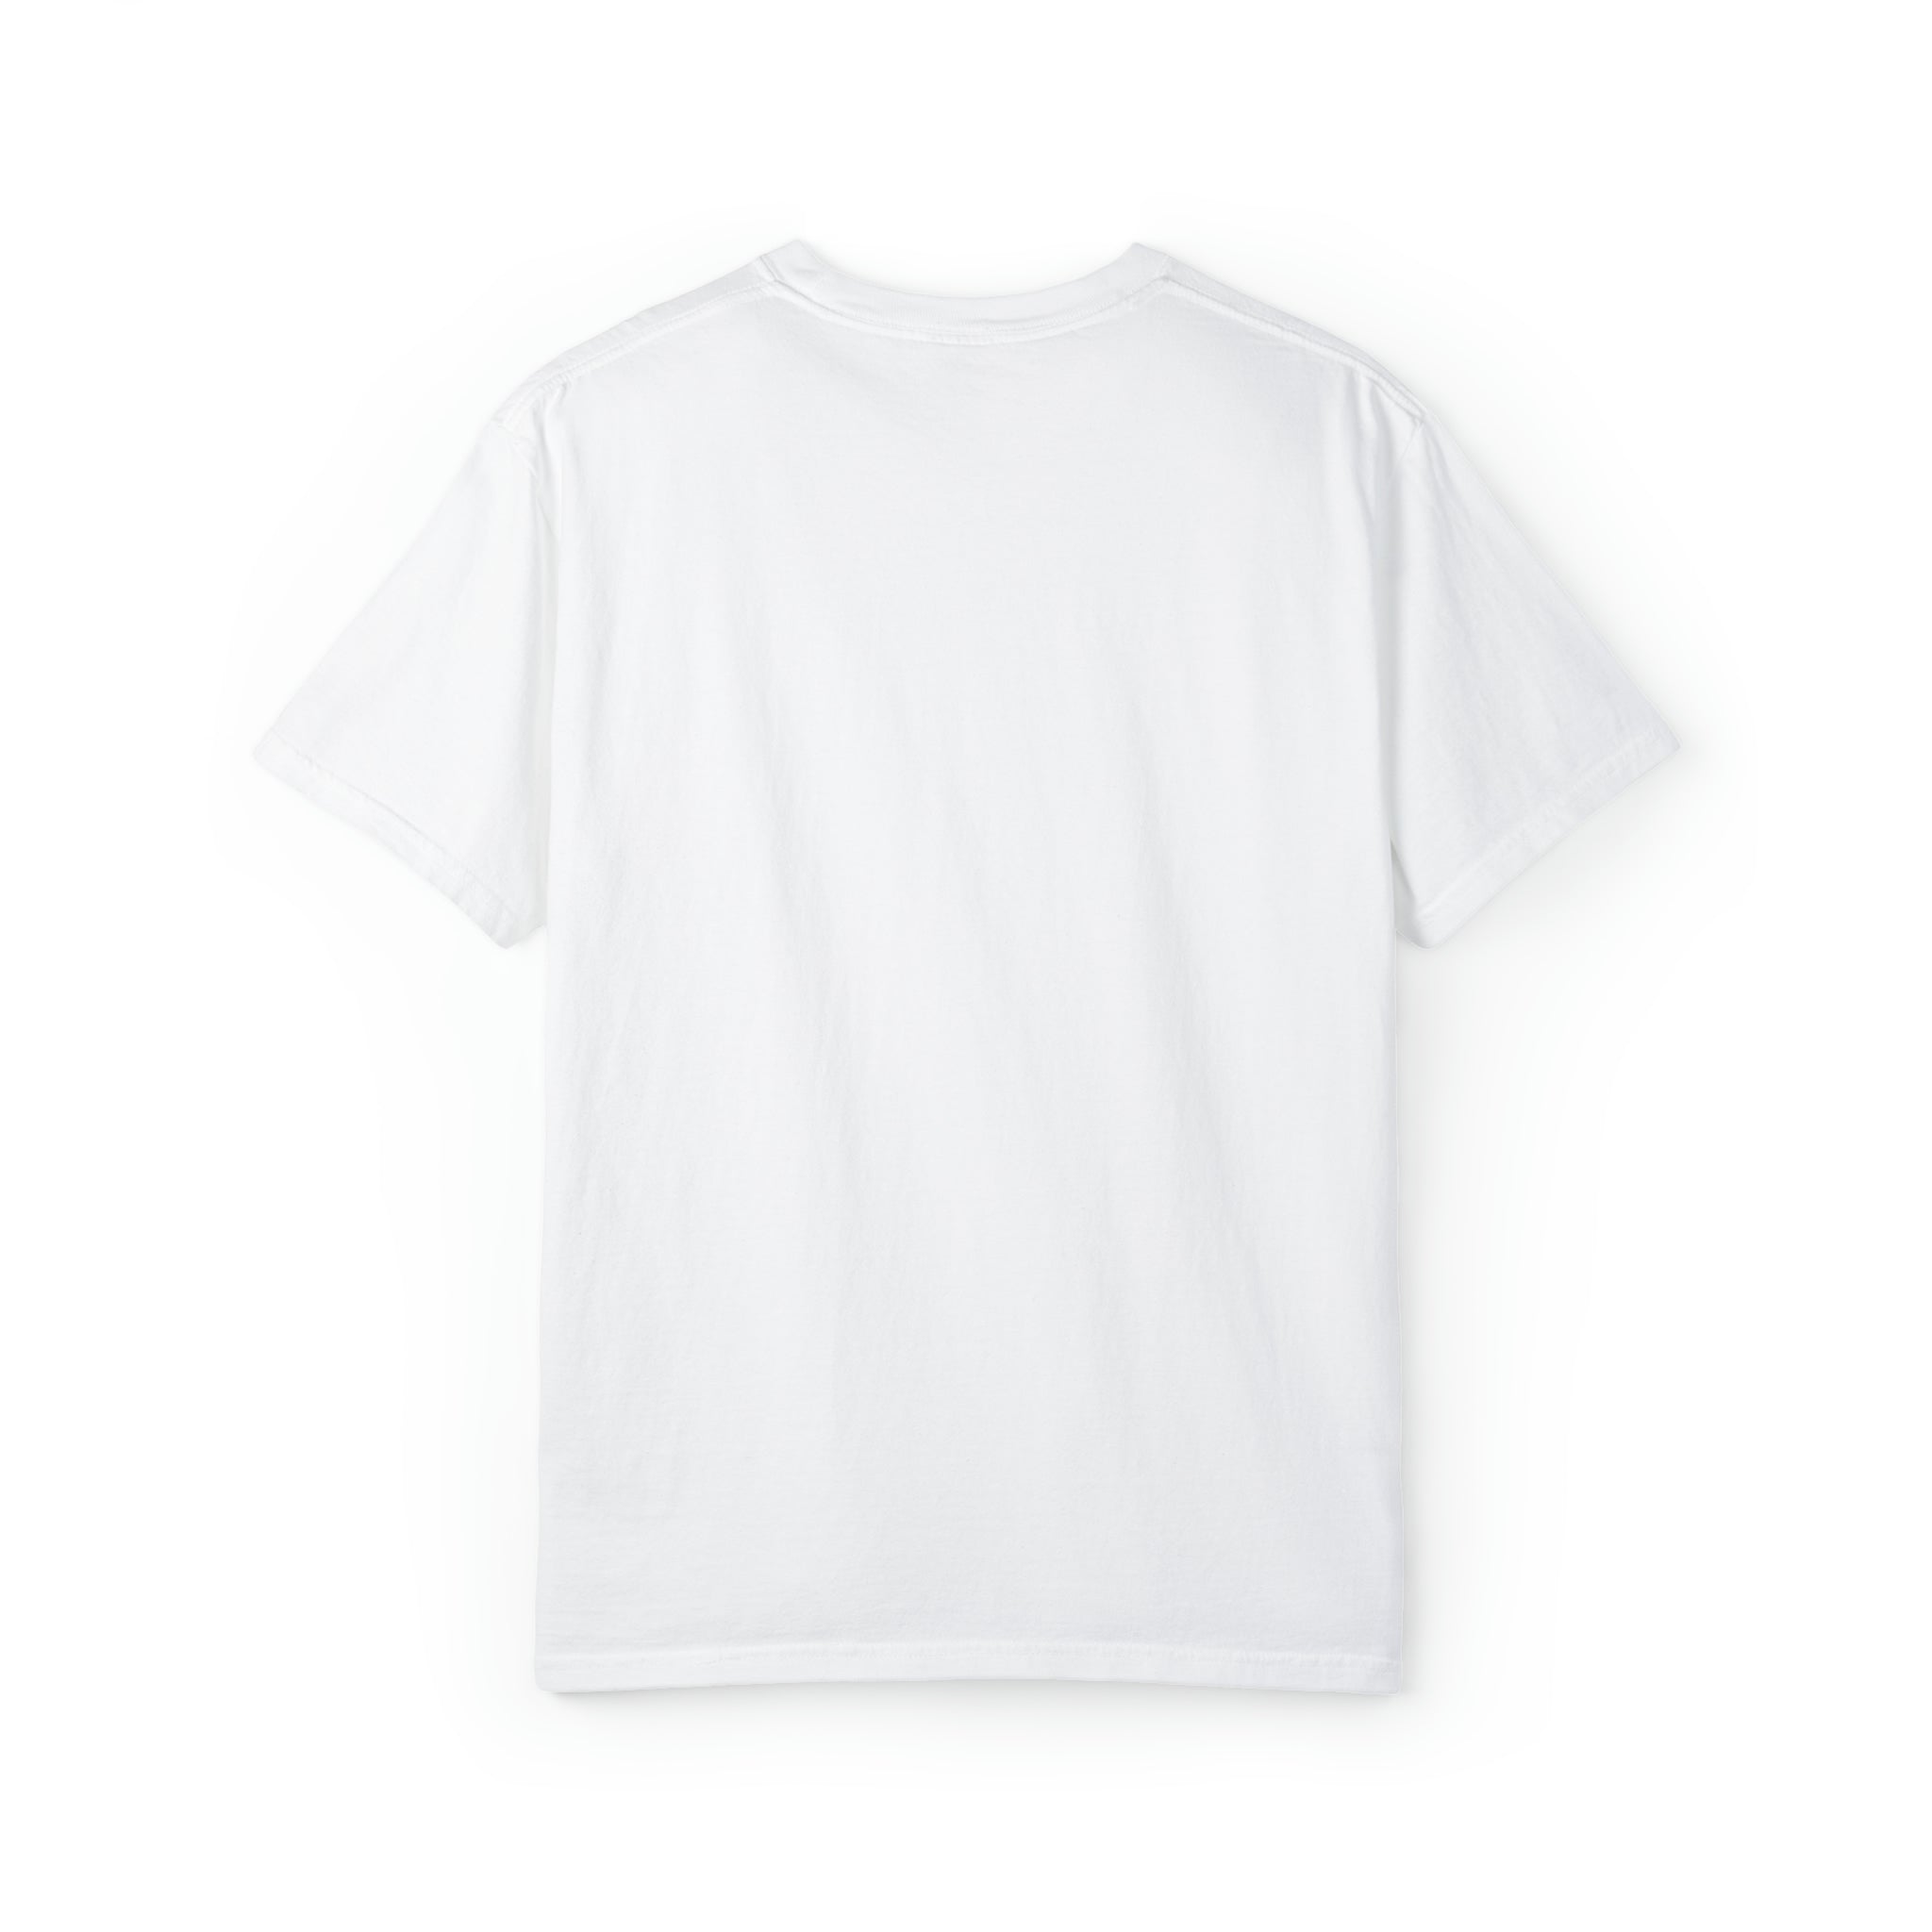 Unisex Kitsune Lanes Garment-Dyed T-shirt